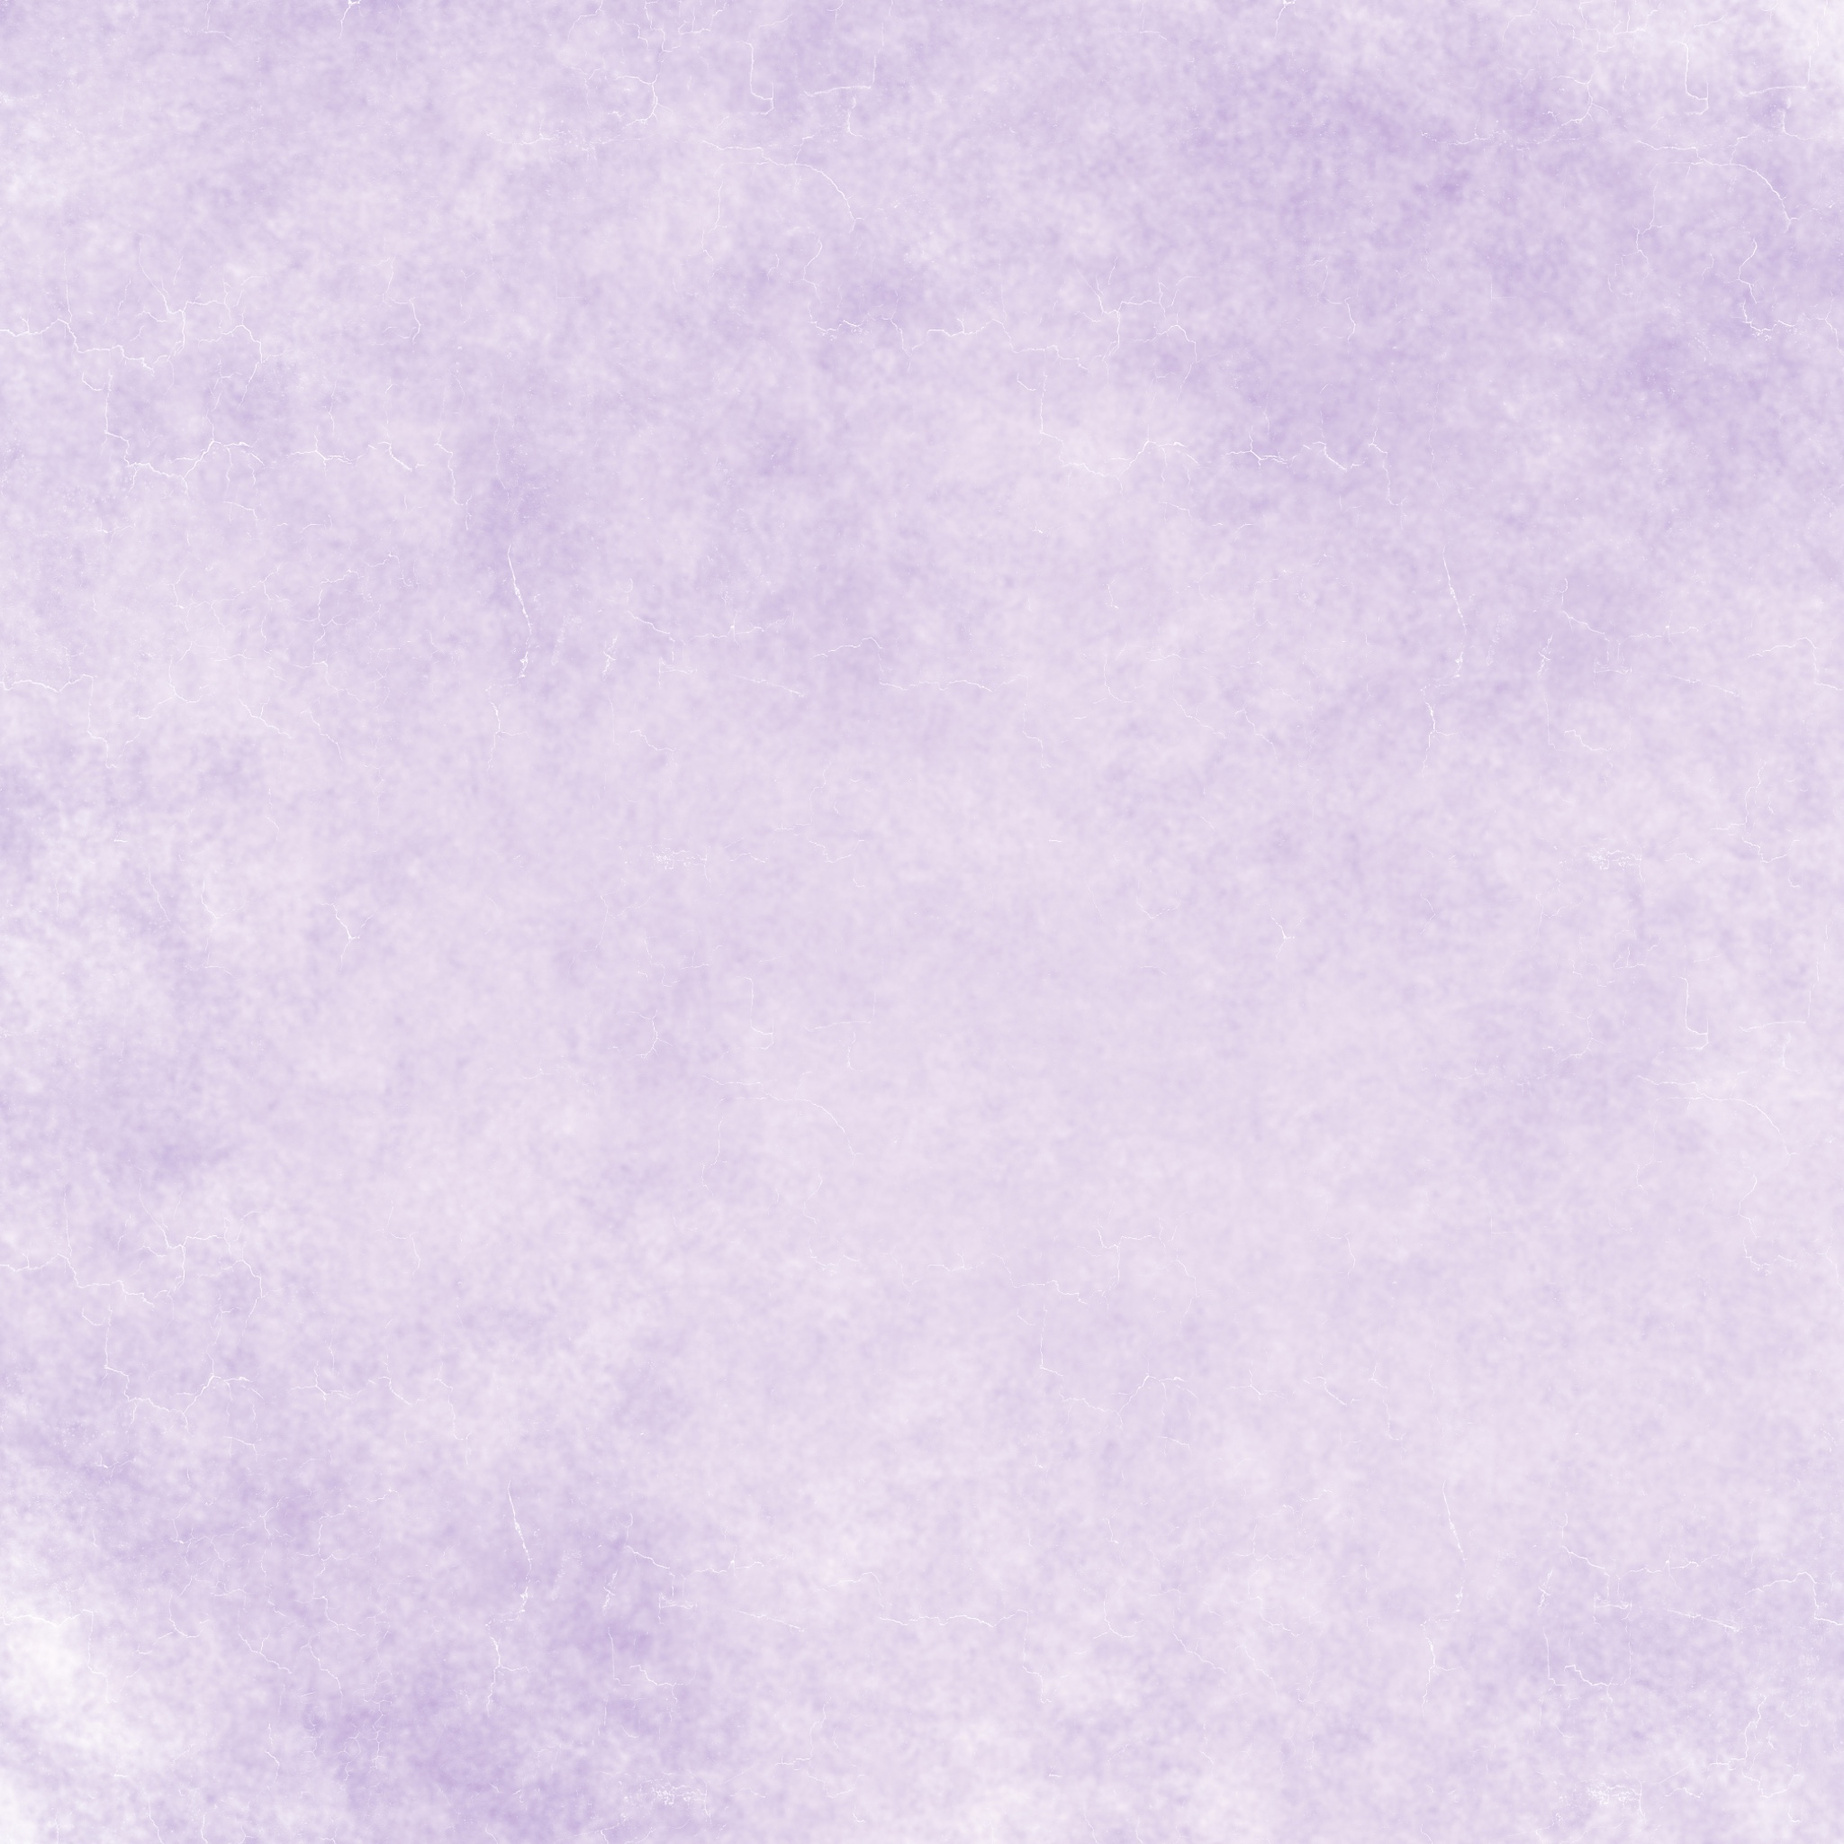 Pastel purple background